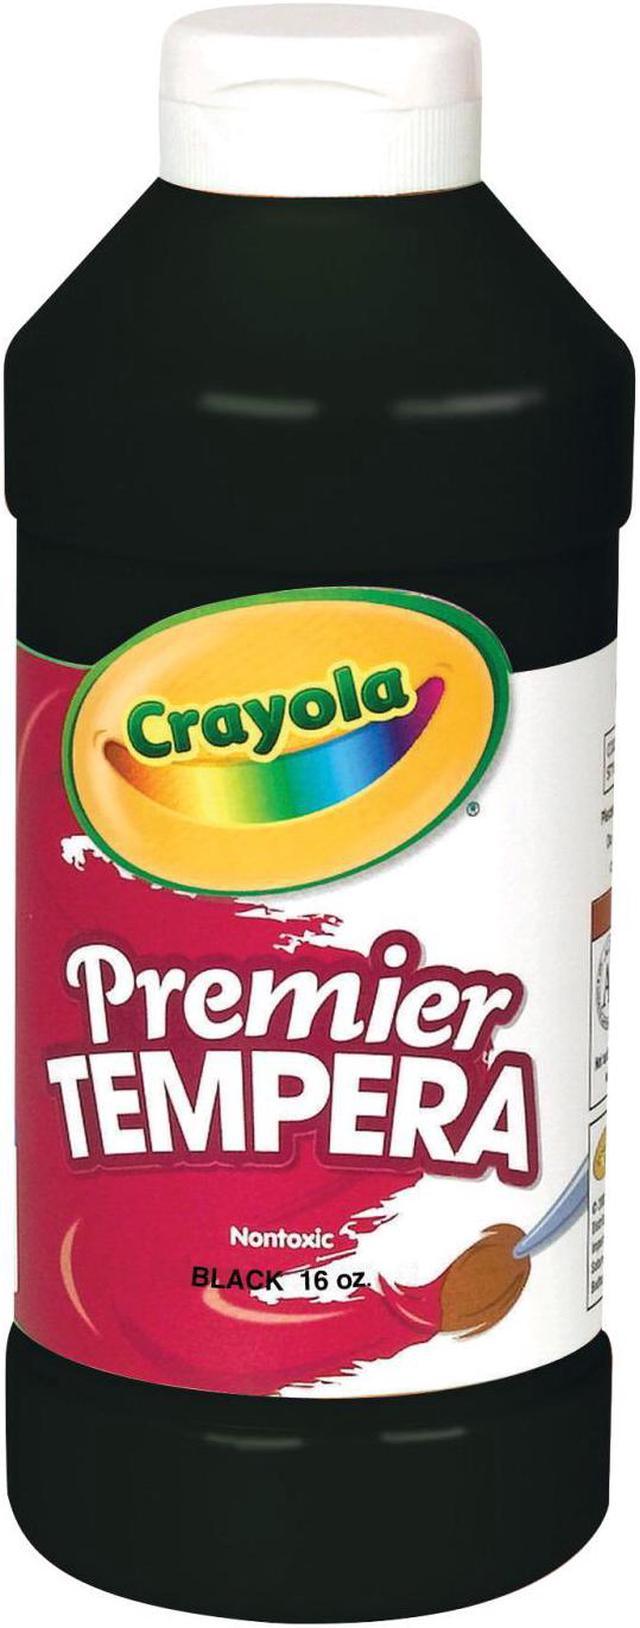 Crayola Premier Tempera Paint 16-oz. Black